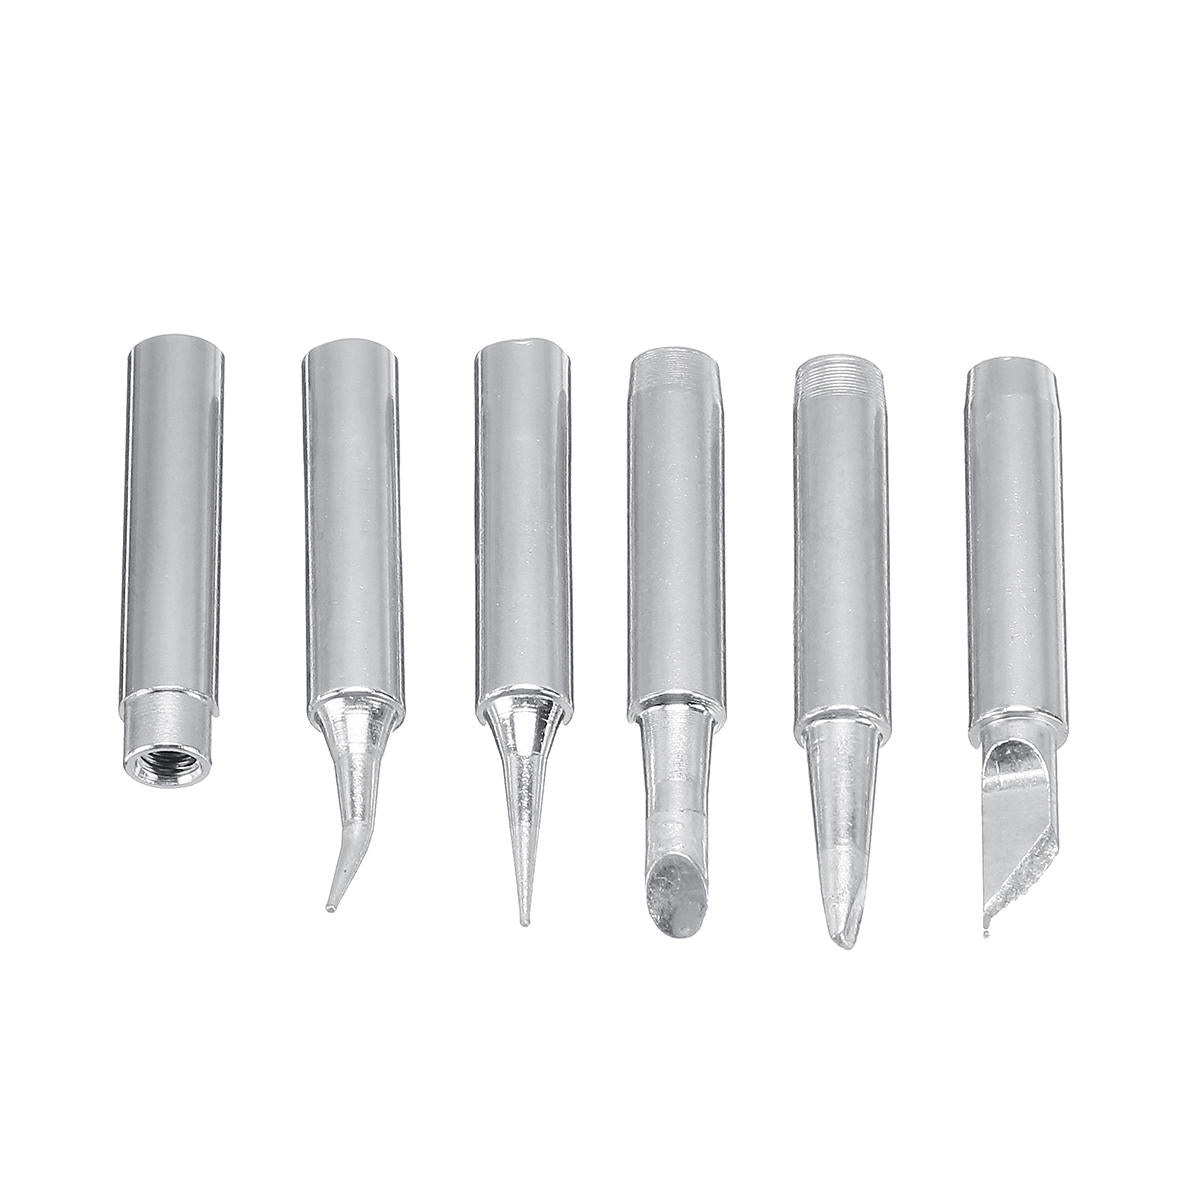 60 stuks 60w 110v houtgestookte pen set tips stencil soldeerbout tool pyrography ambachten kit